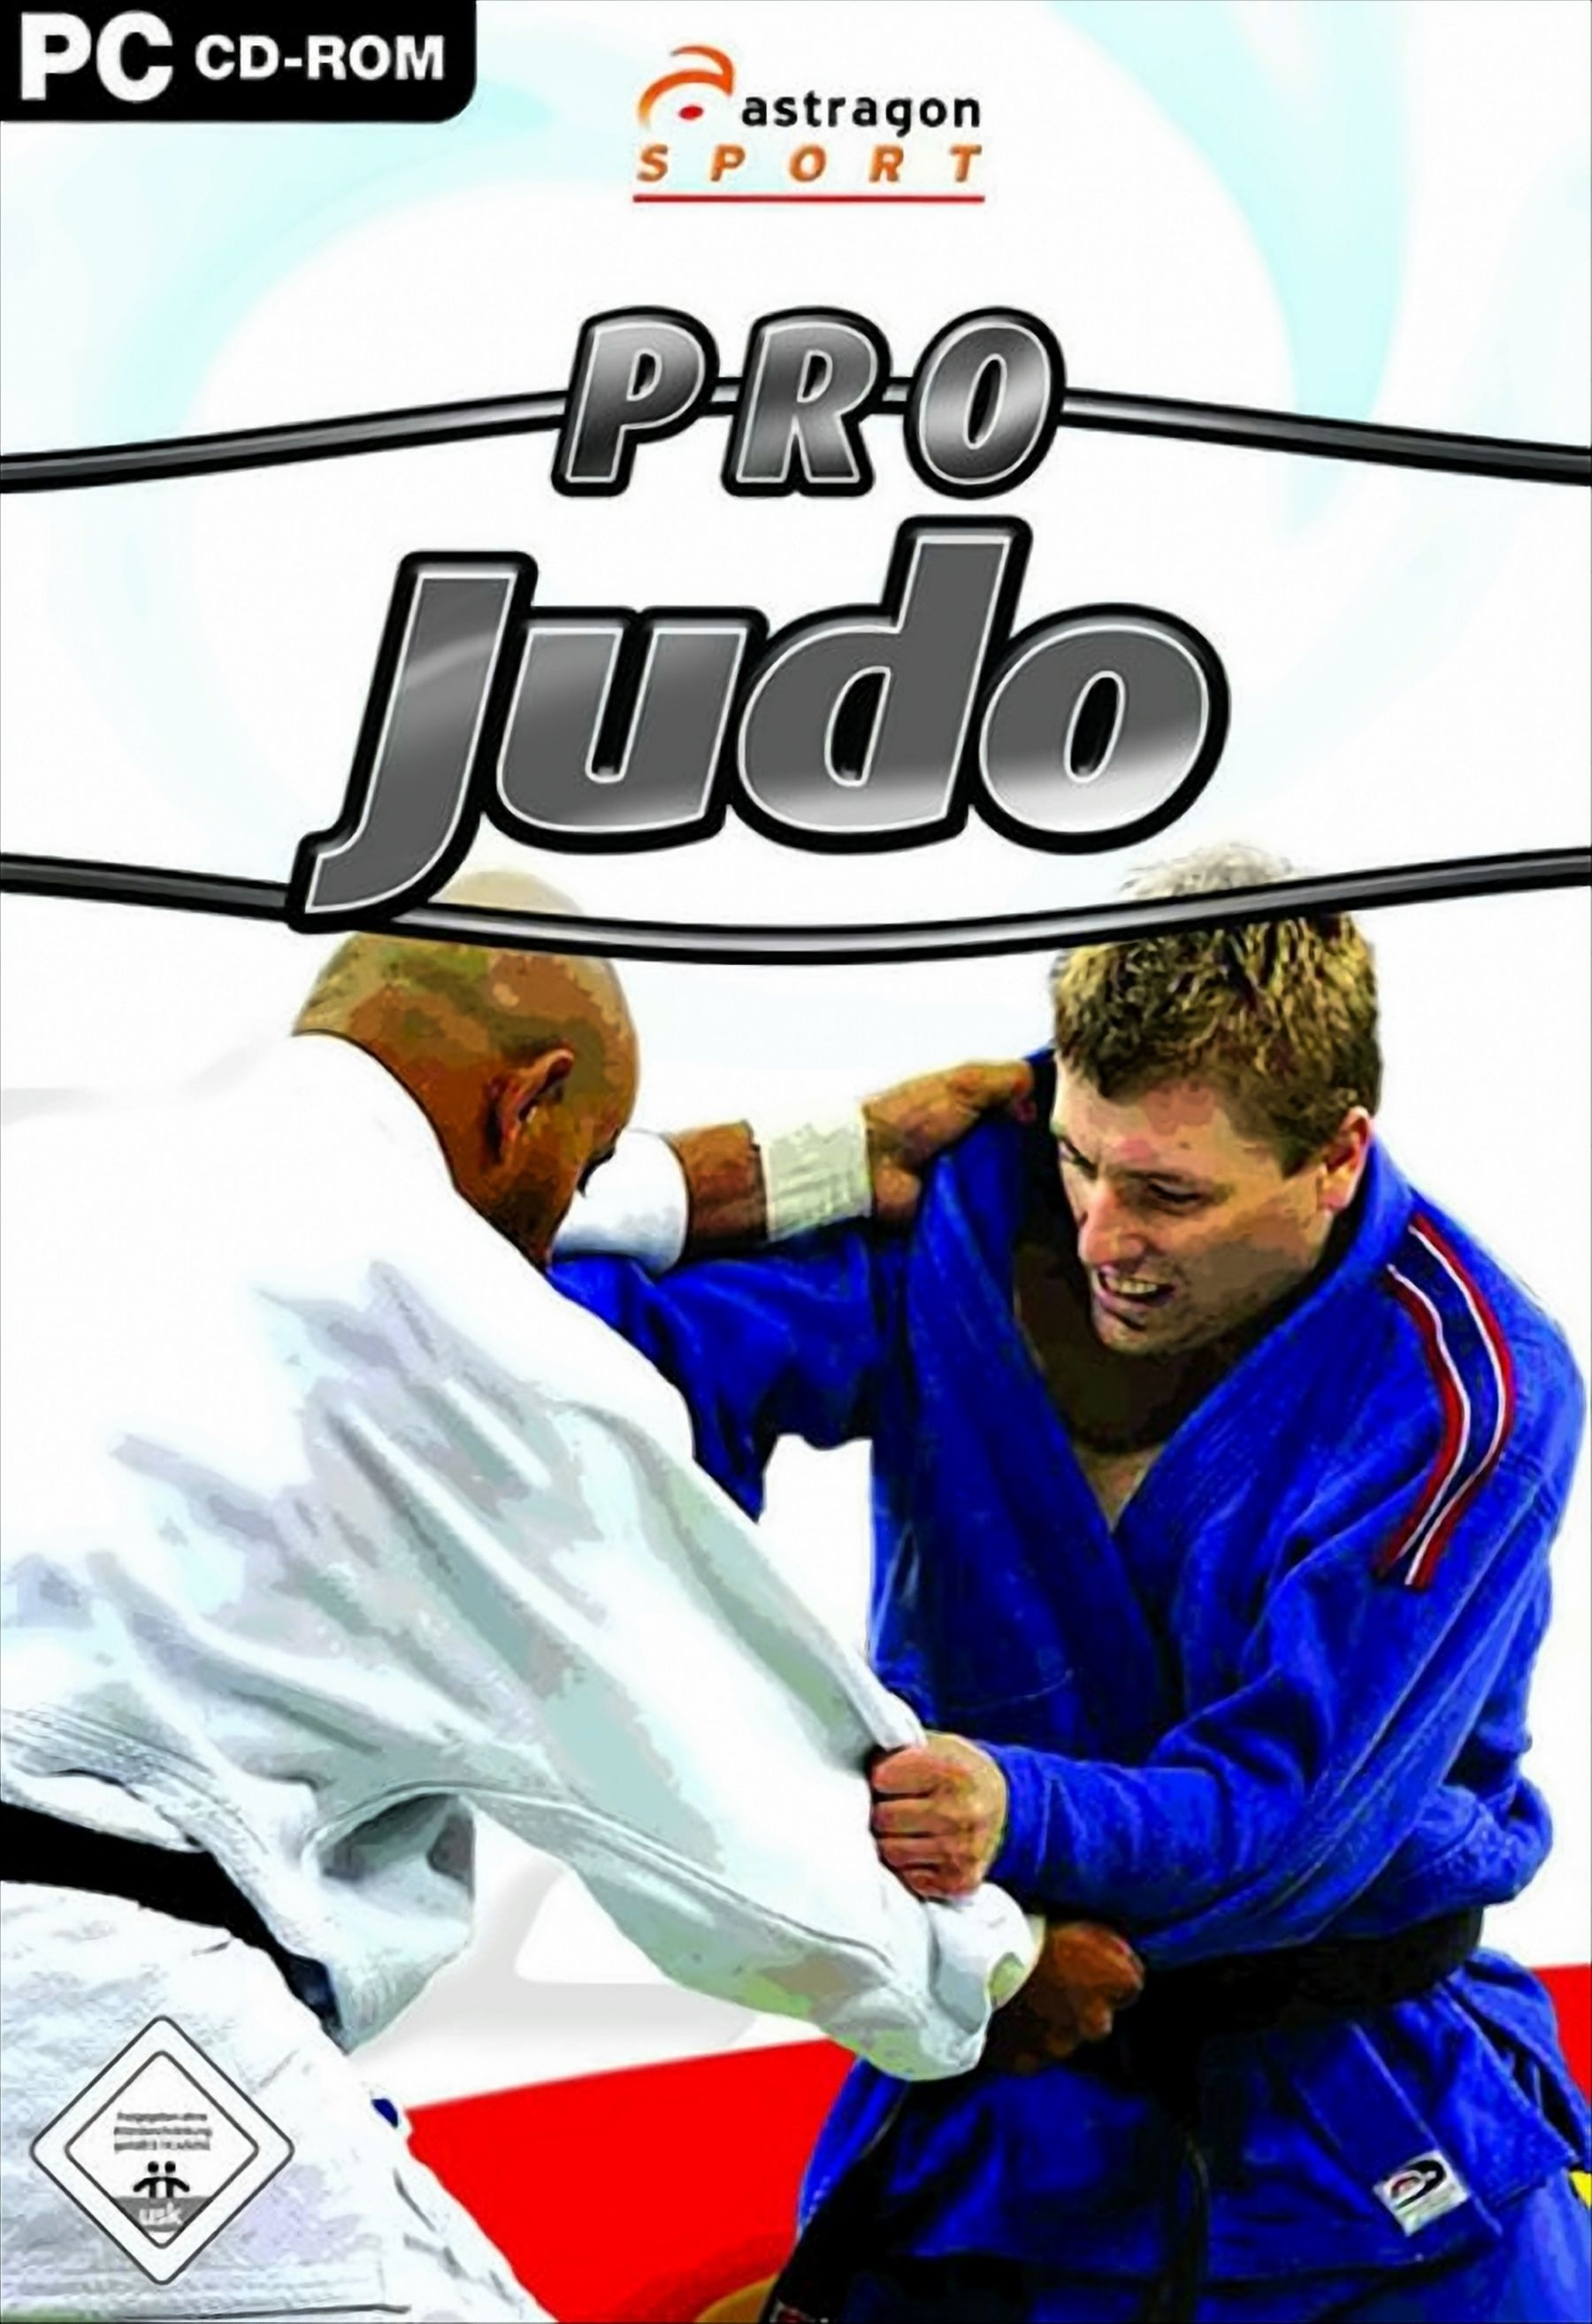 Judo - Pro [PC]